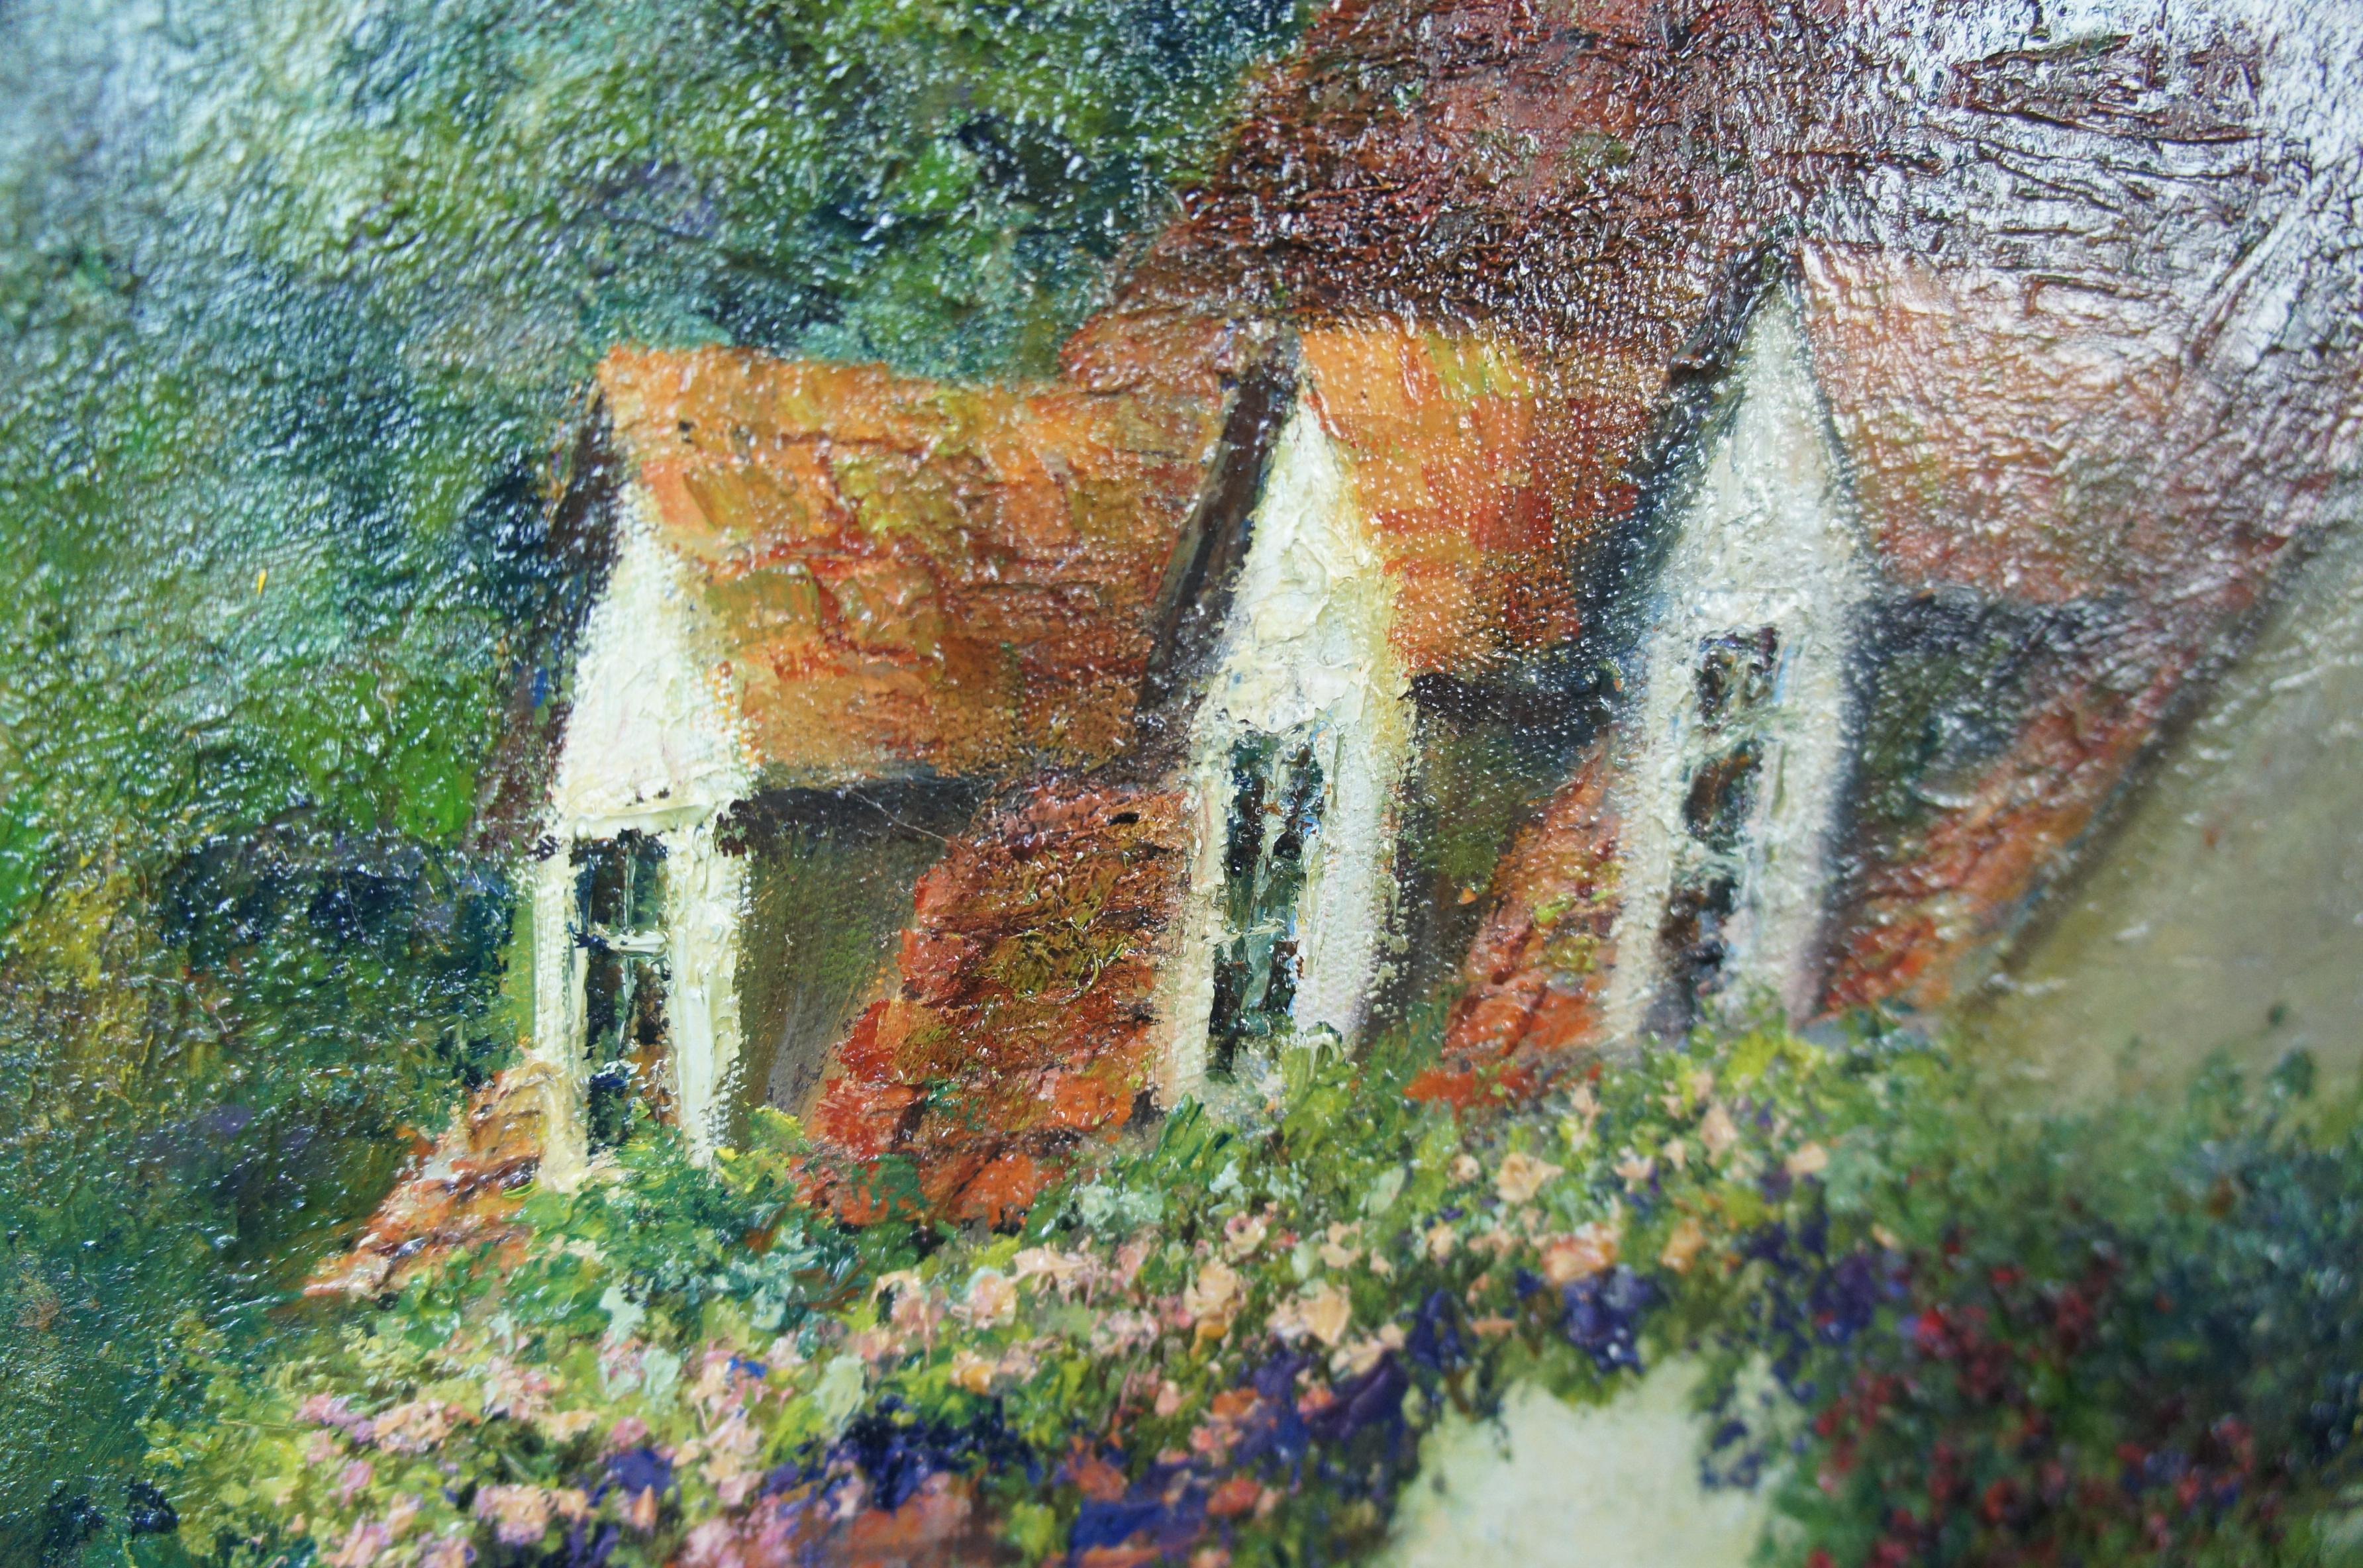 Dwayne Warwick Original Oil Painting on Canvas Cottage Garden Landscape Floral 2